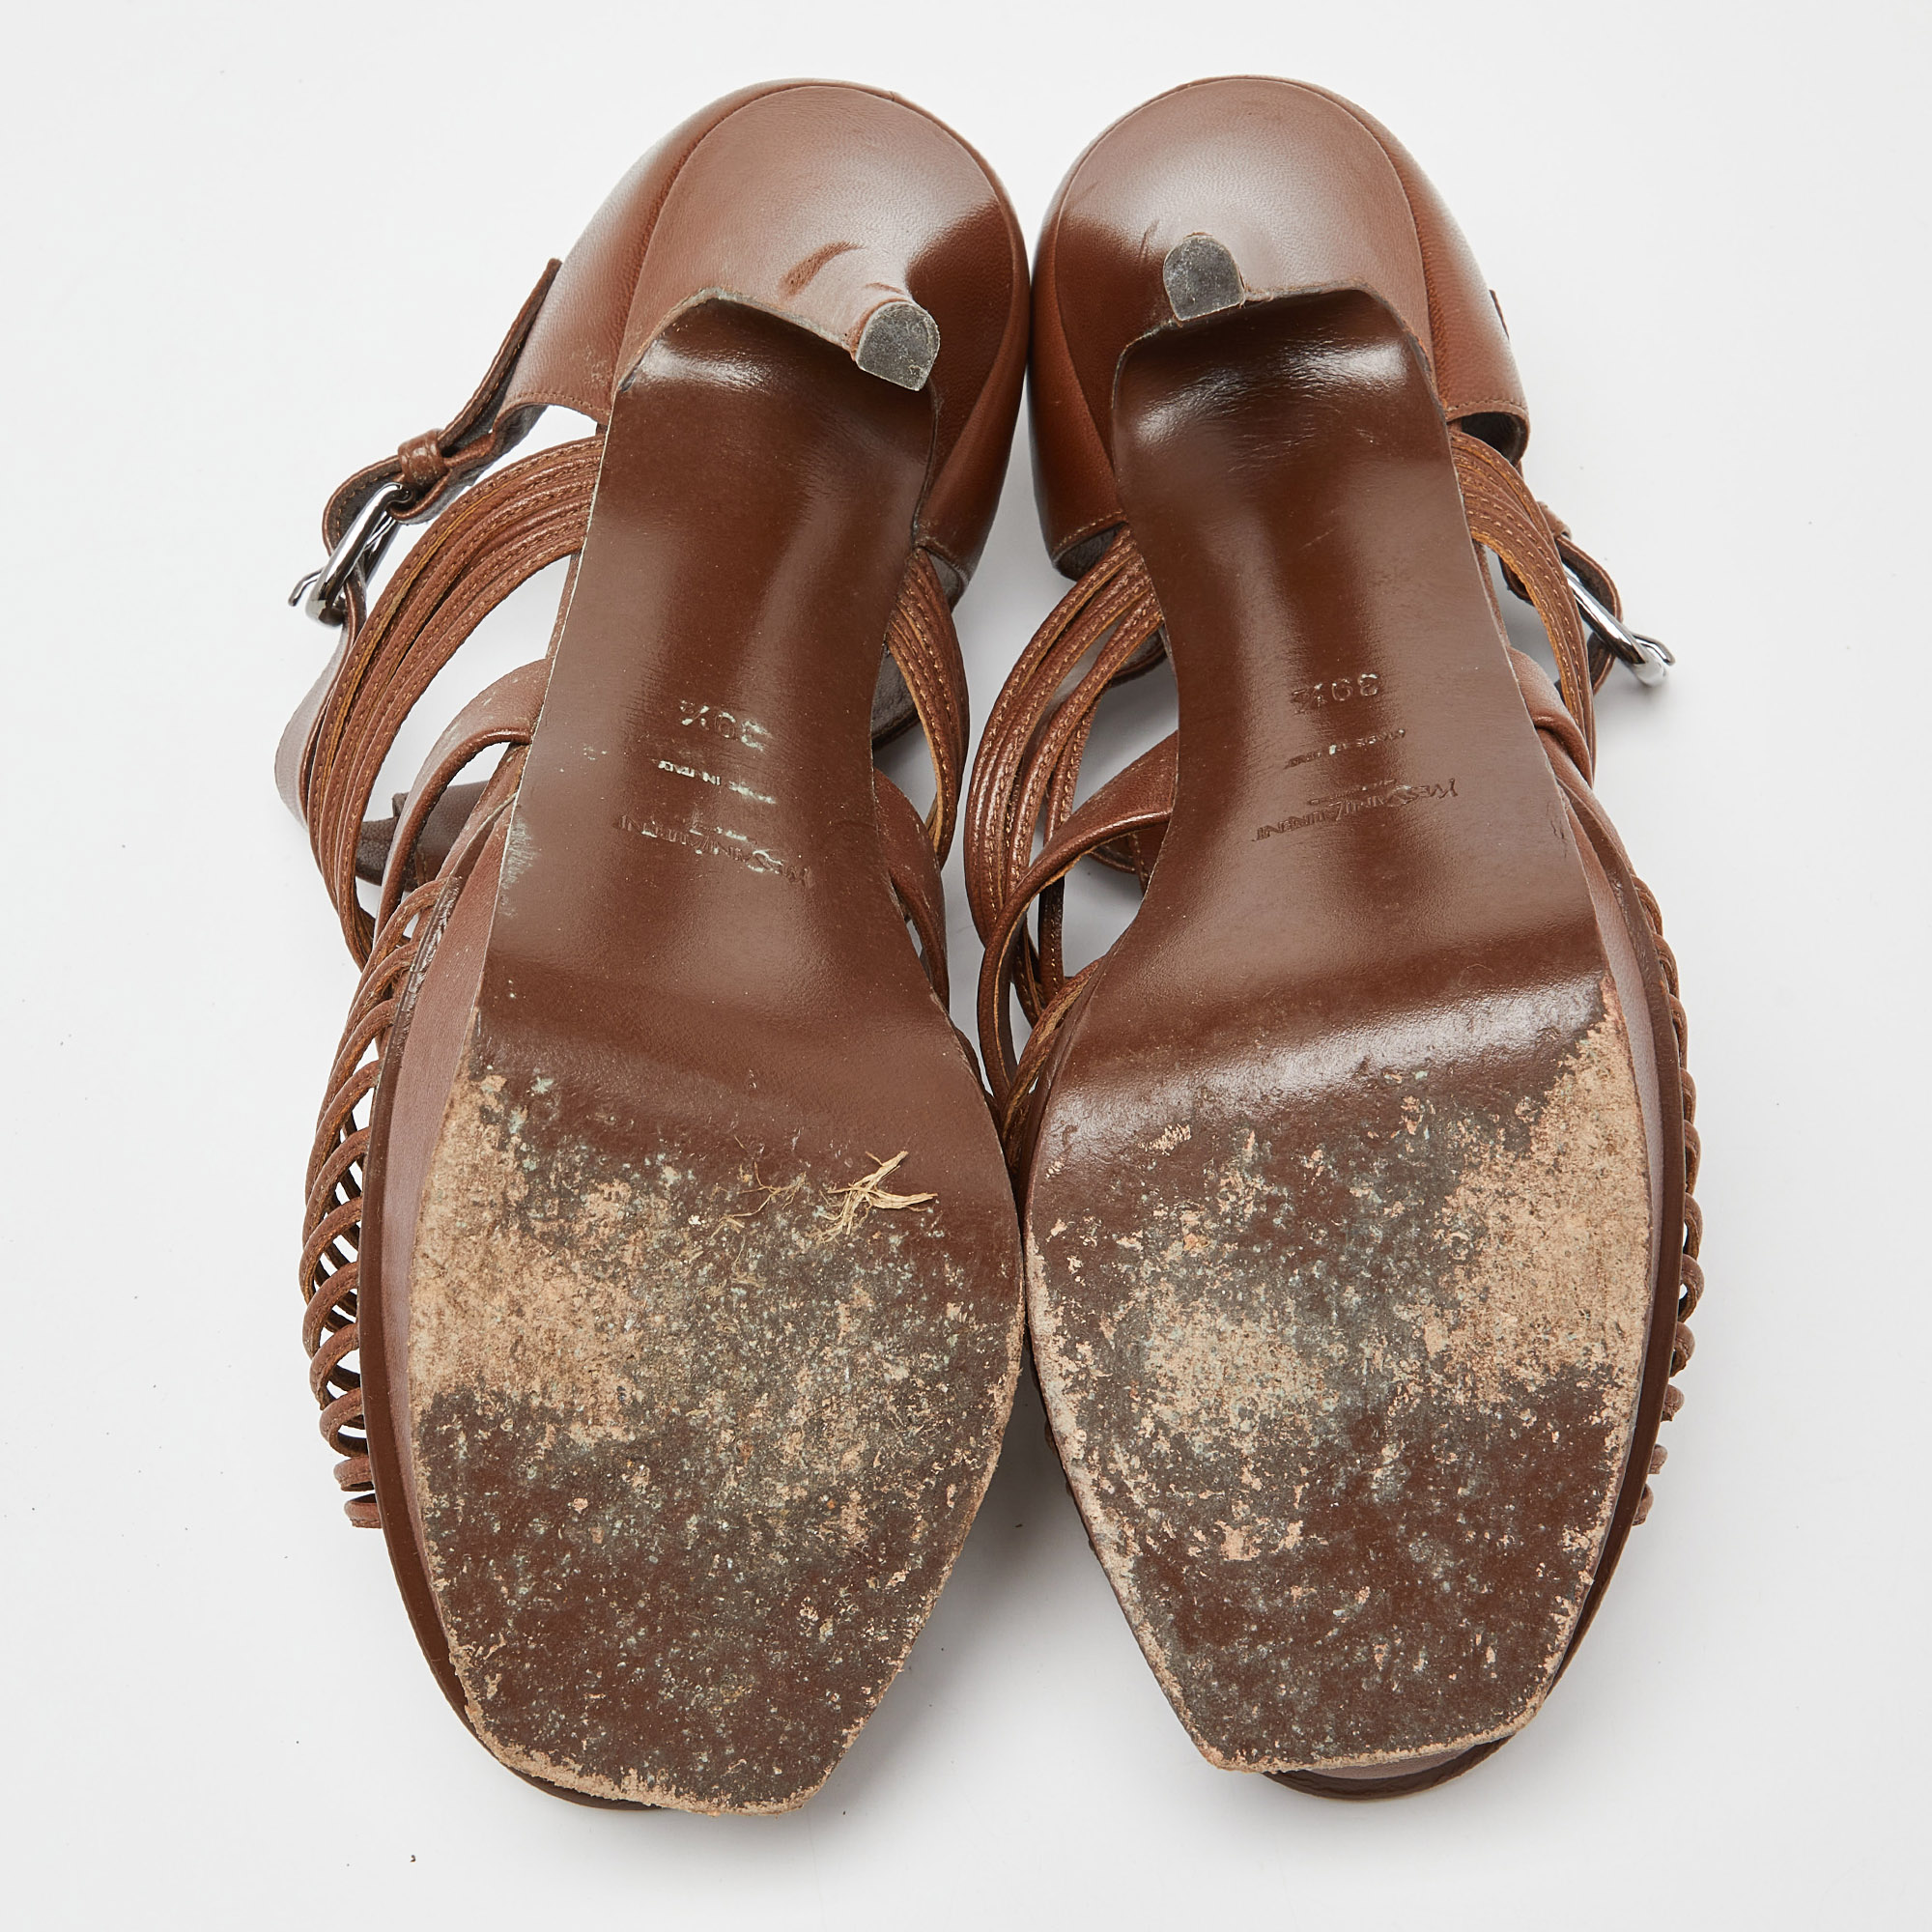 Saint Laurent Brown Leather Strappy Platform Sandals Size 39.5